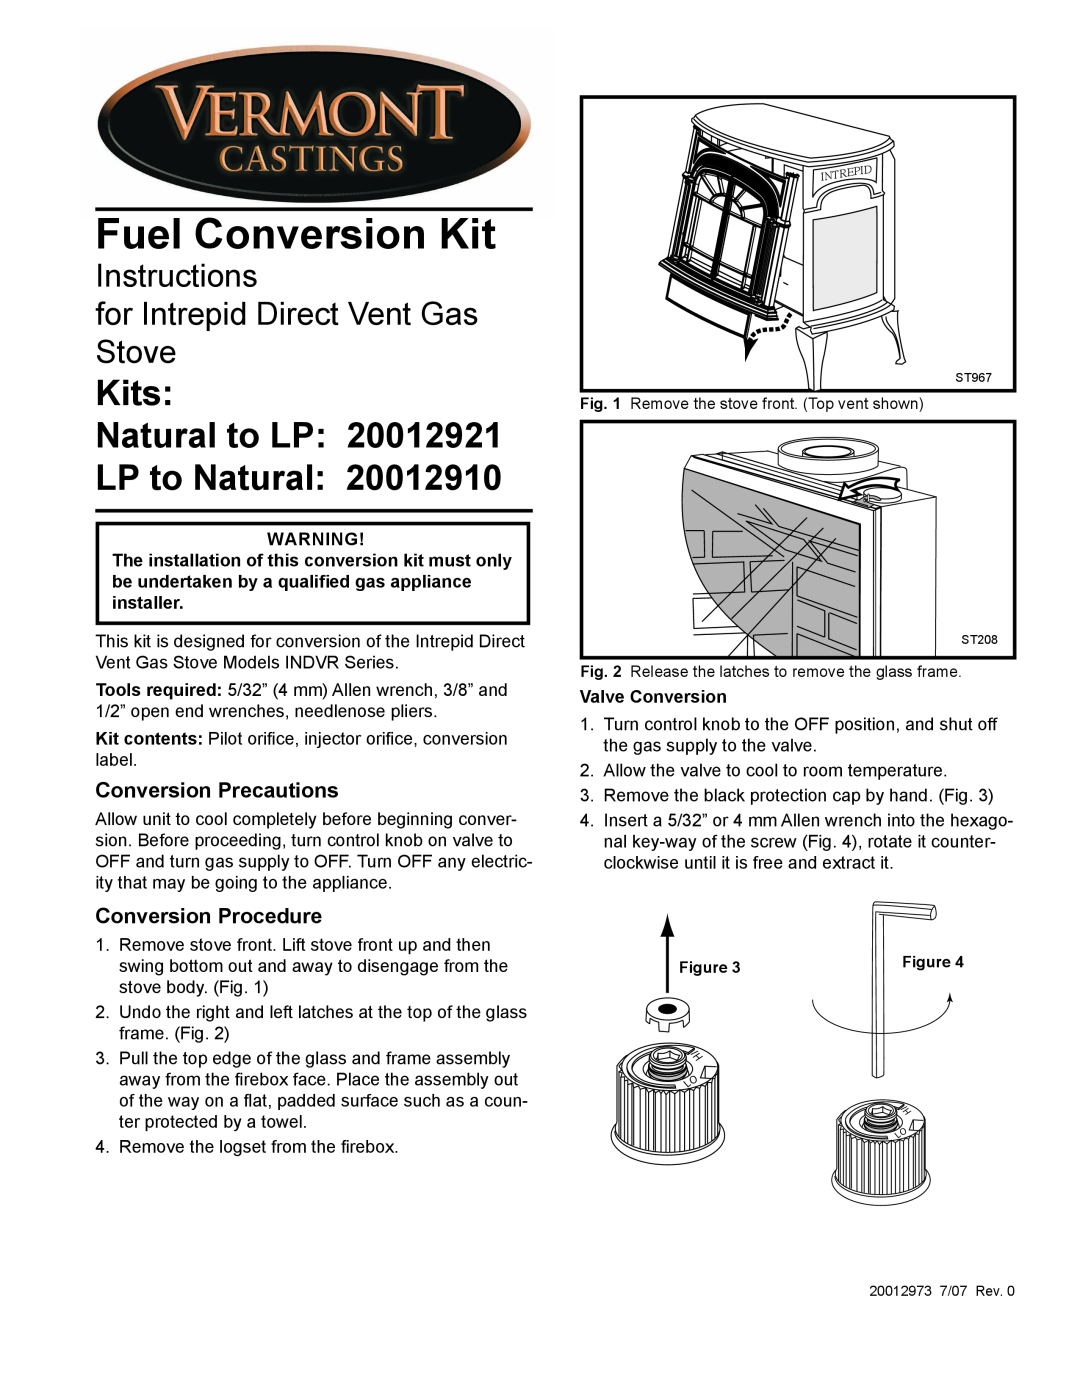 Vermont Casting ST208 manual Valve Conversion, Fuel Conversion Kit, Kits Natural to LP LP to Natural, Conversion Procedure 